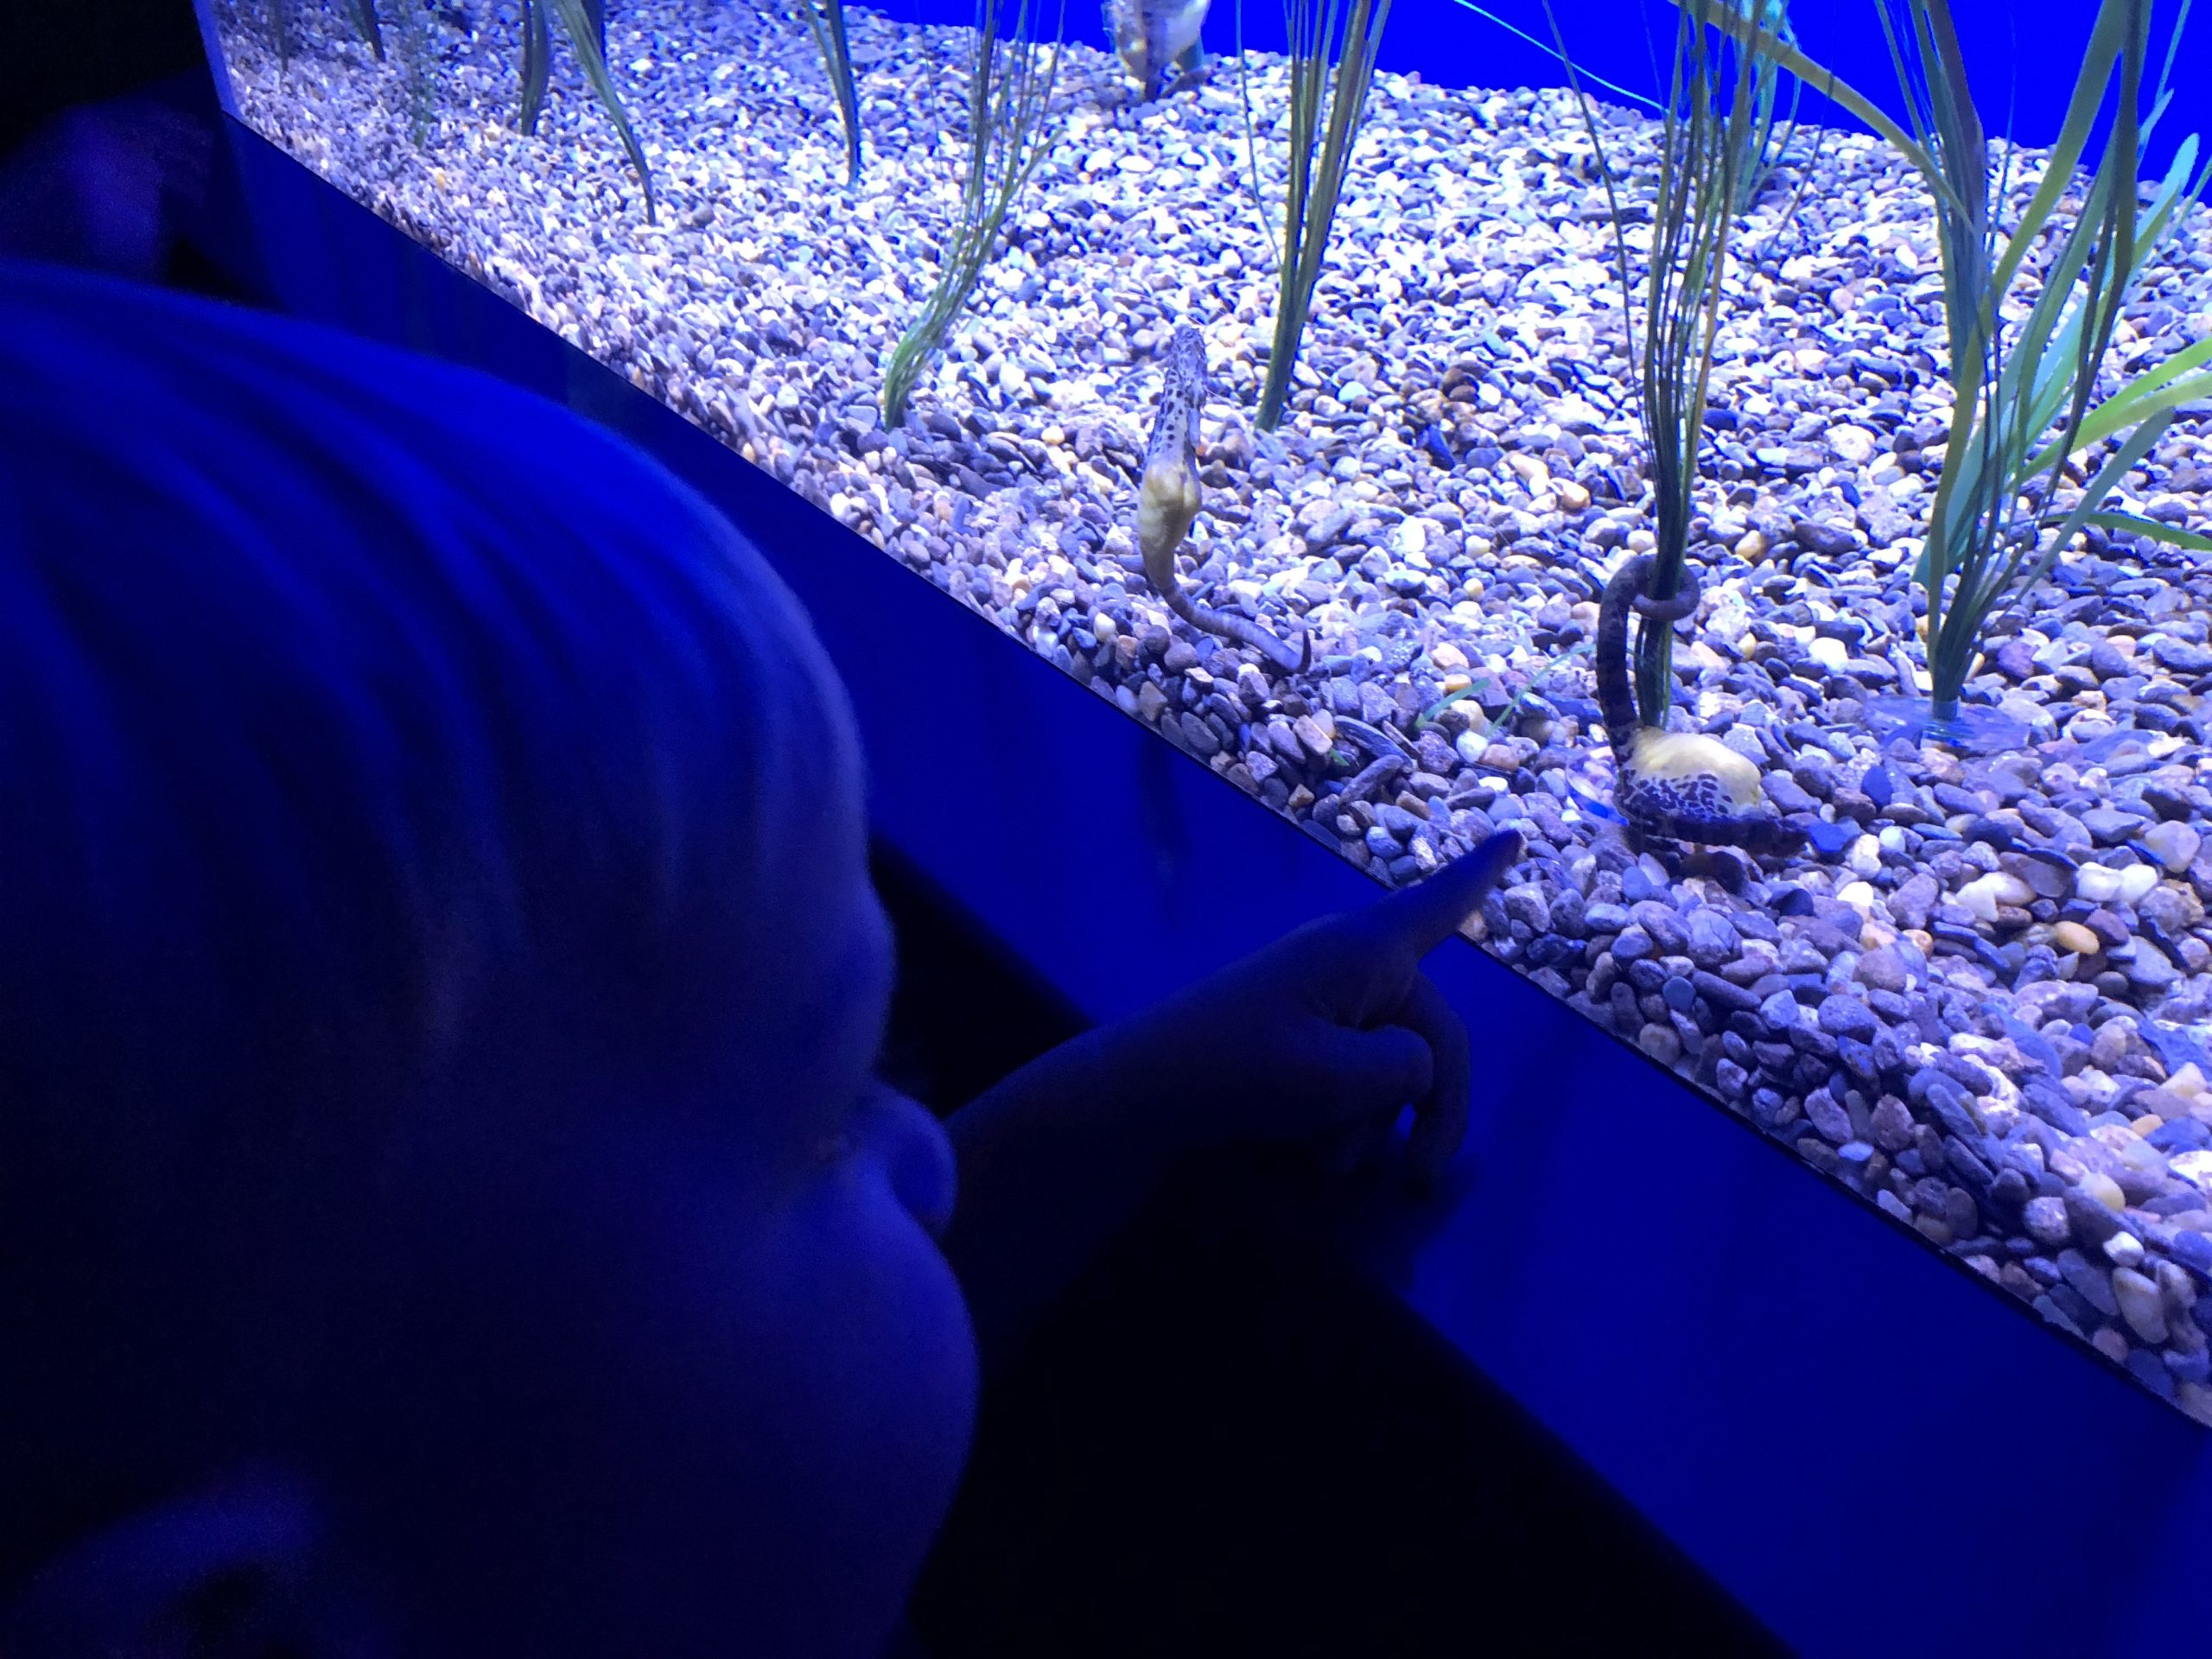 Watching the seahorses - Ripley's Aquarium in Gatlinburg